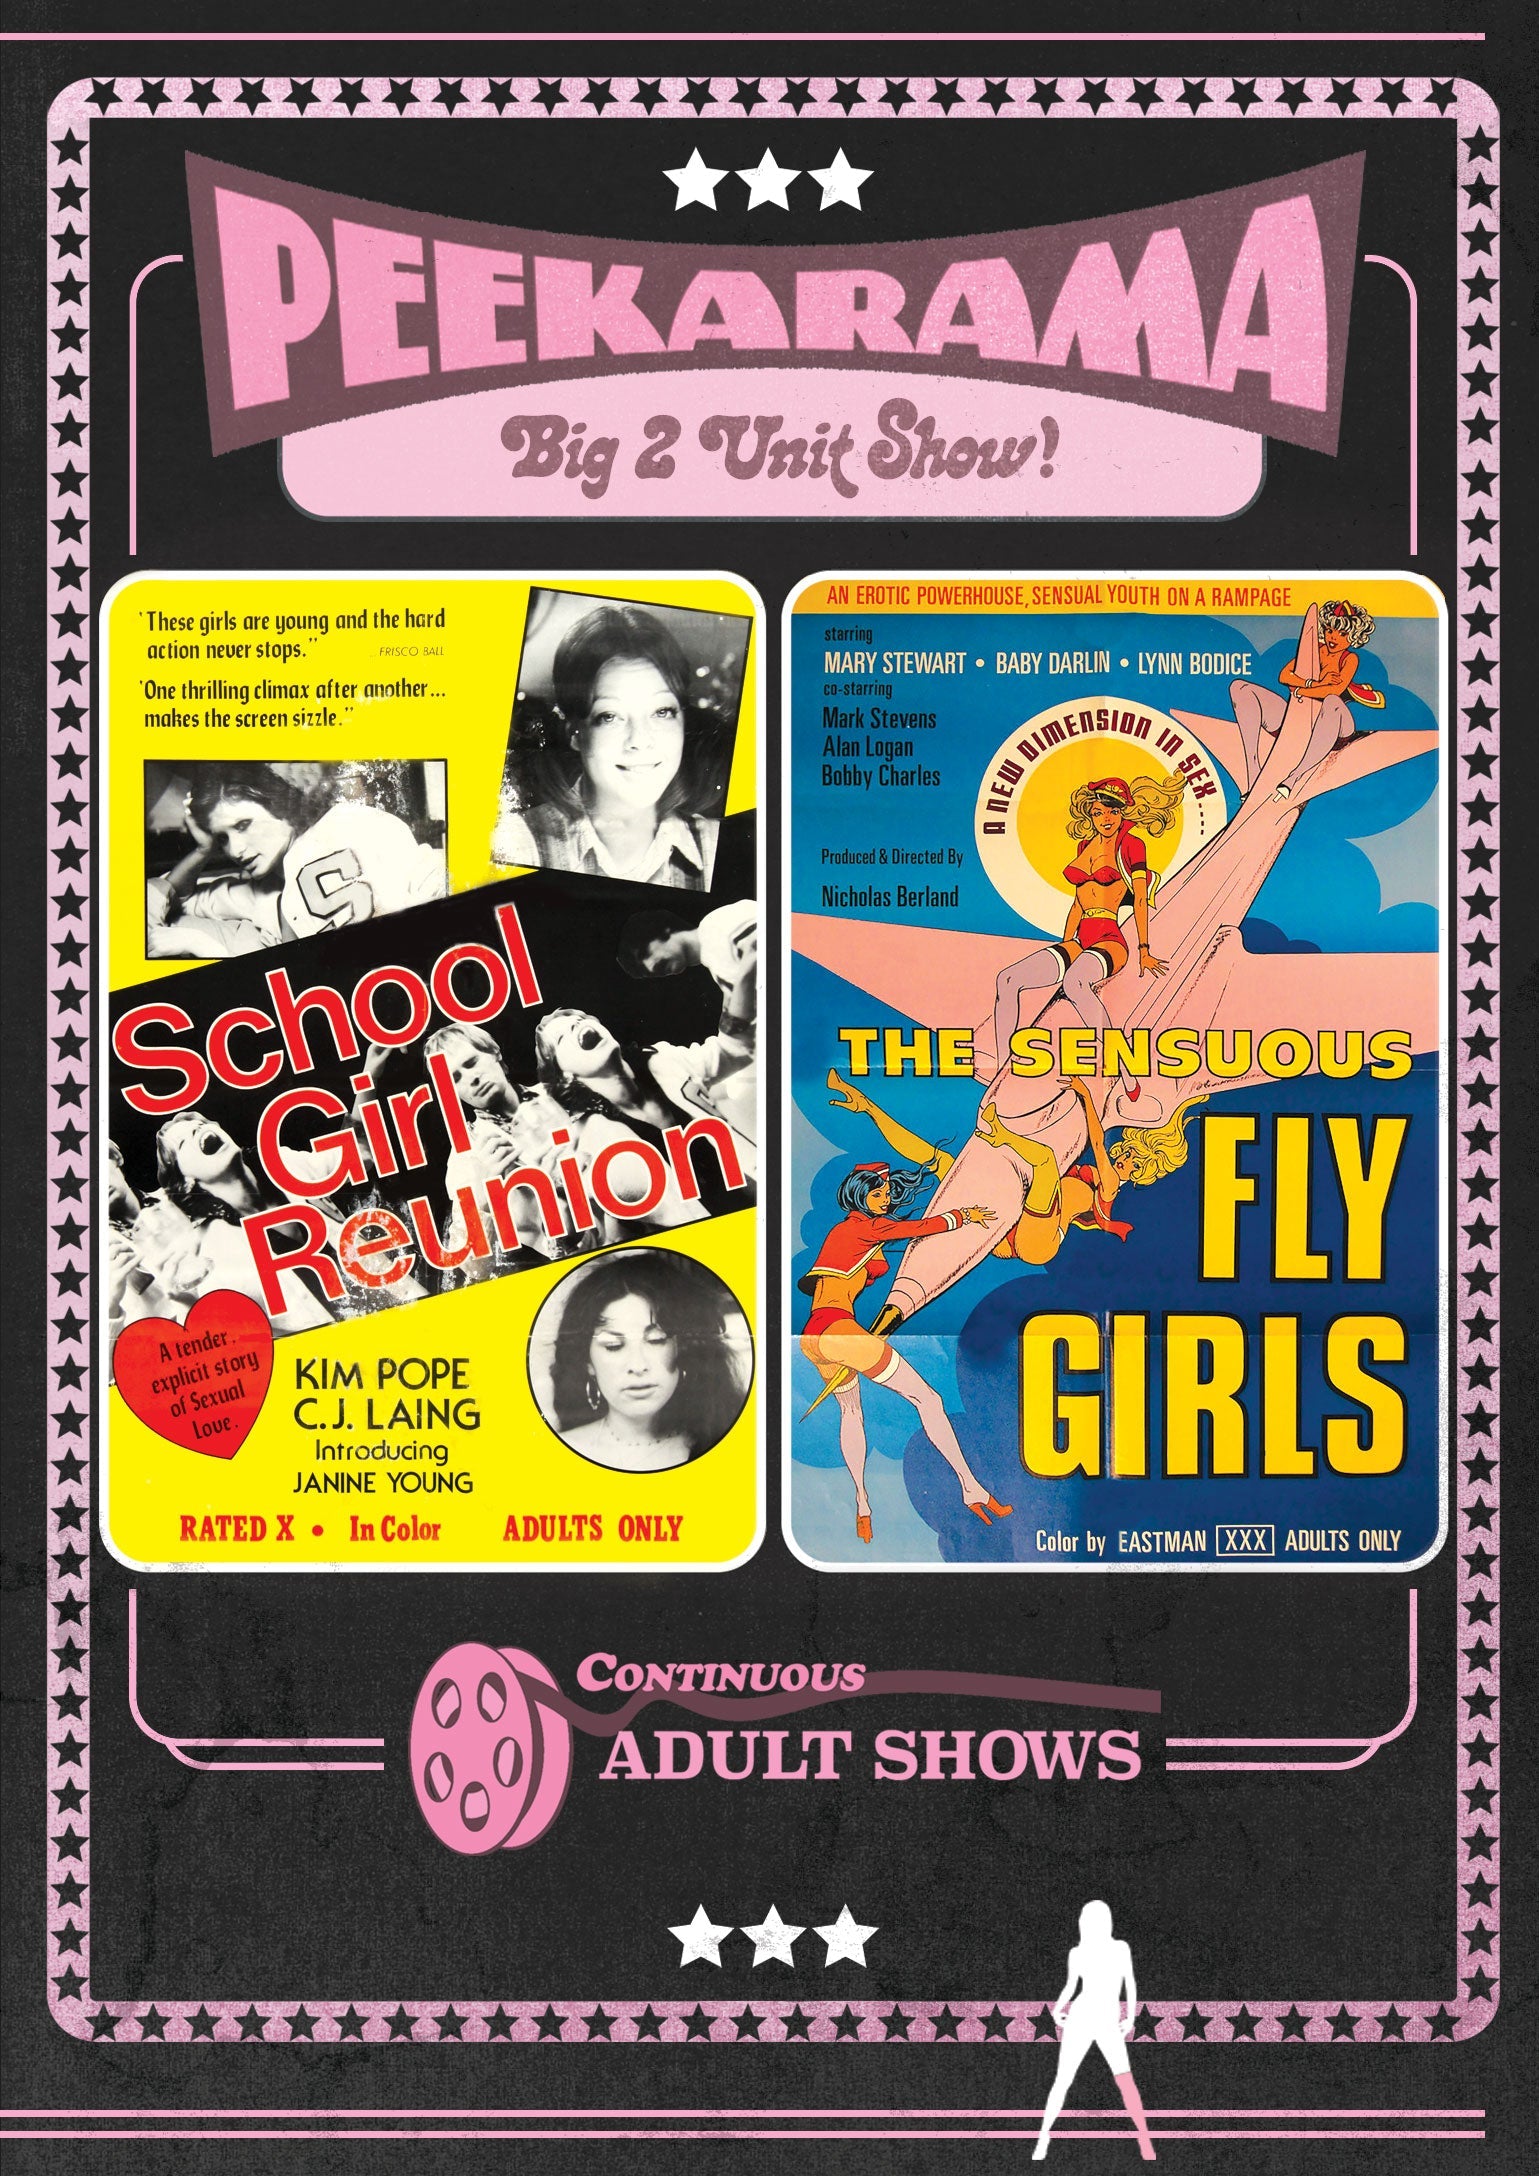 School Girl Reunion / The Sensuous Fly Girls Dvd